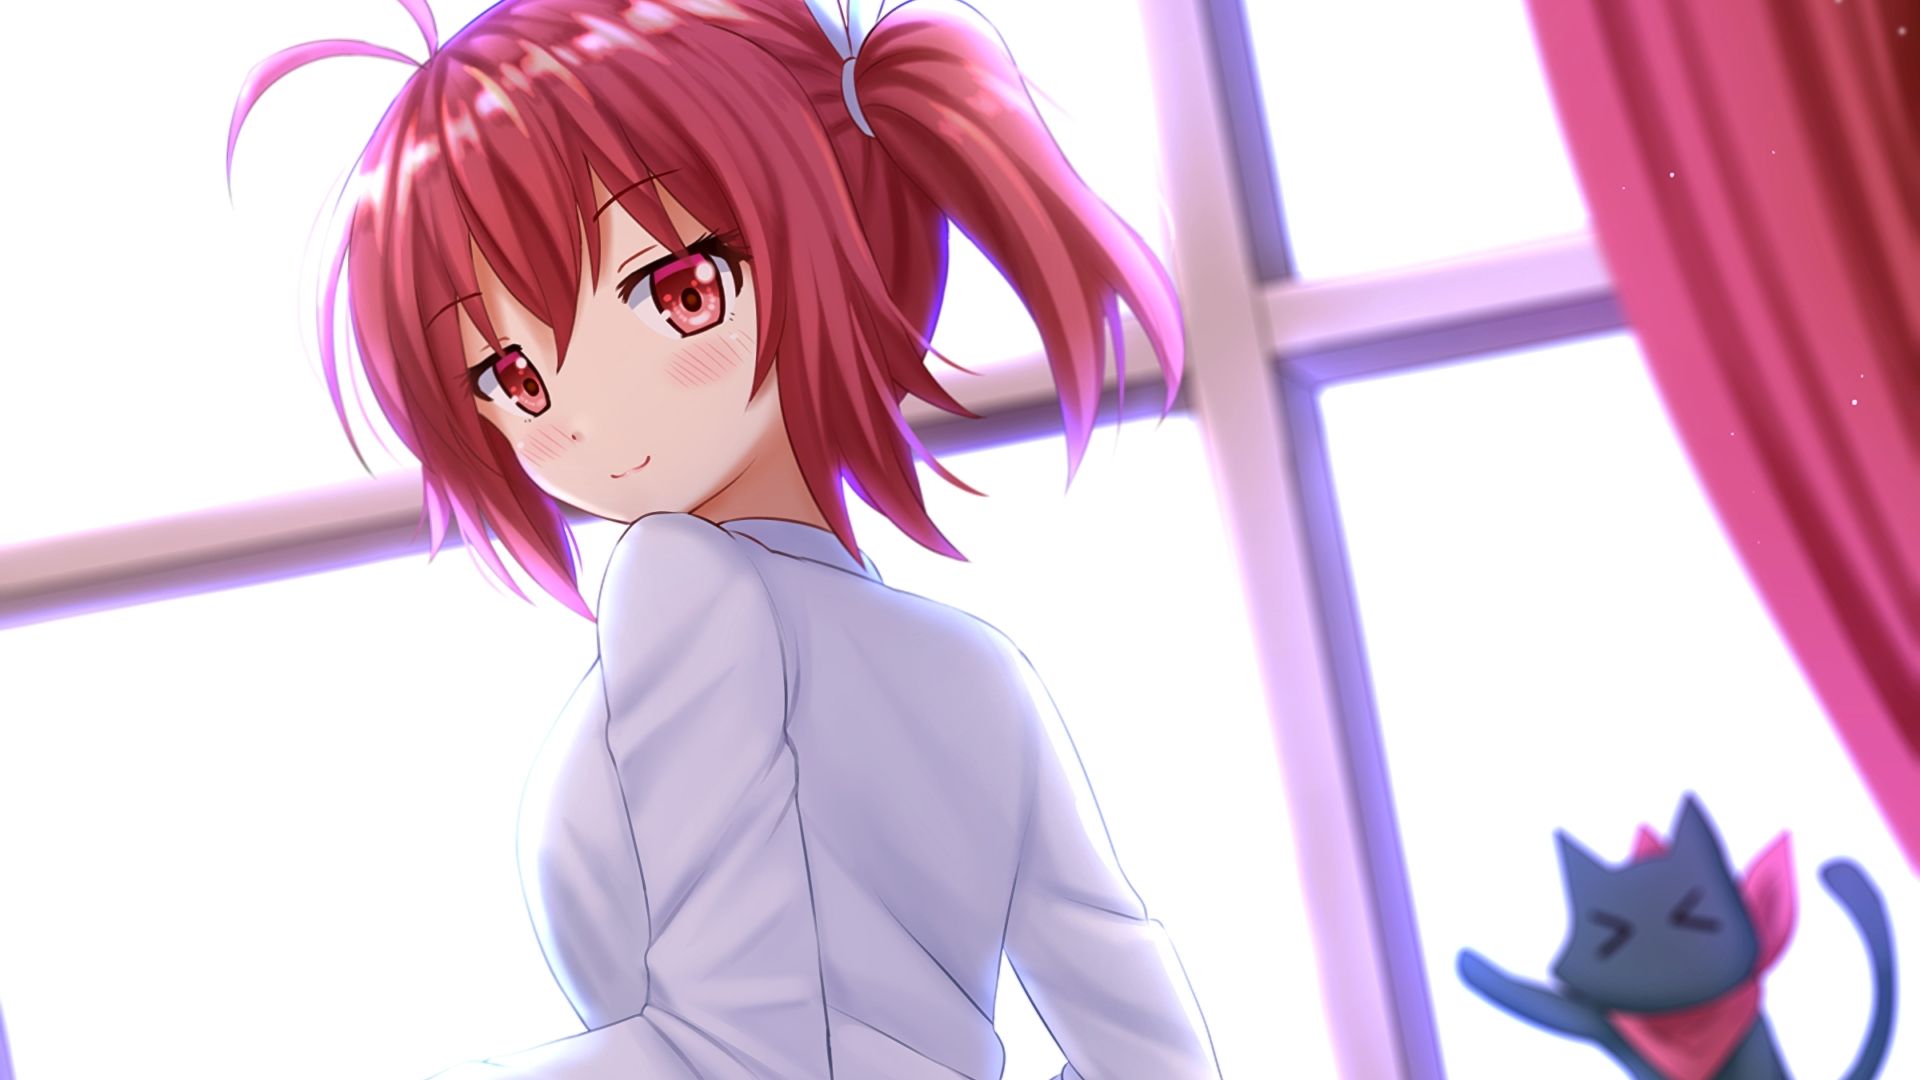 Wallpaper Red head, cute anime girl, anime